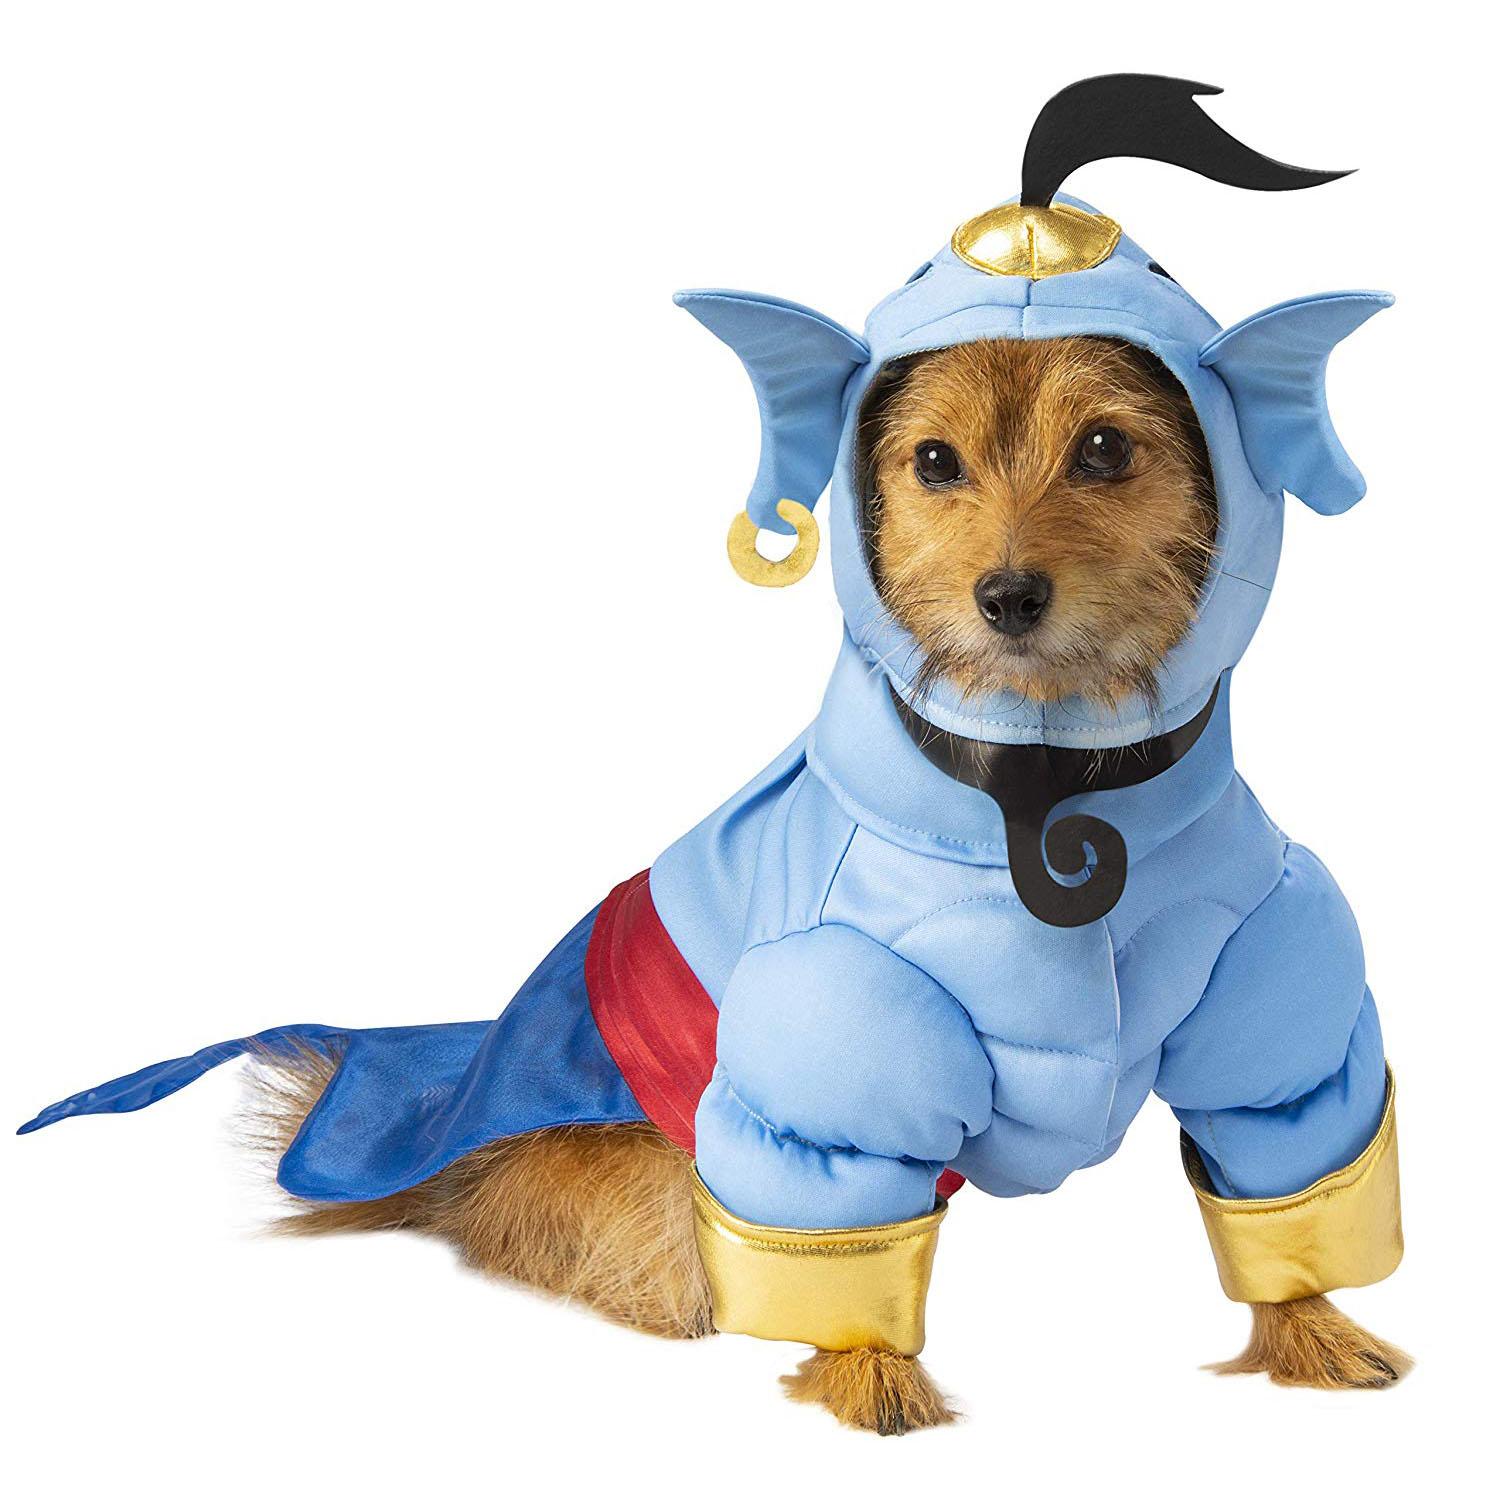 Genie Dog Costume from Disney's Aladdin